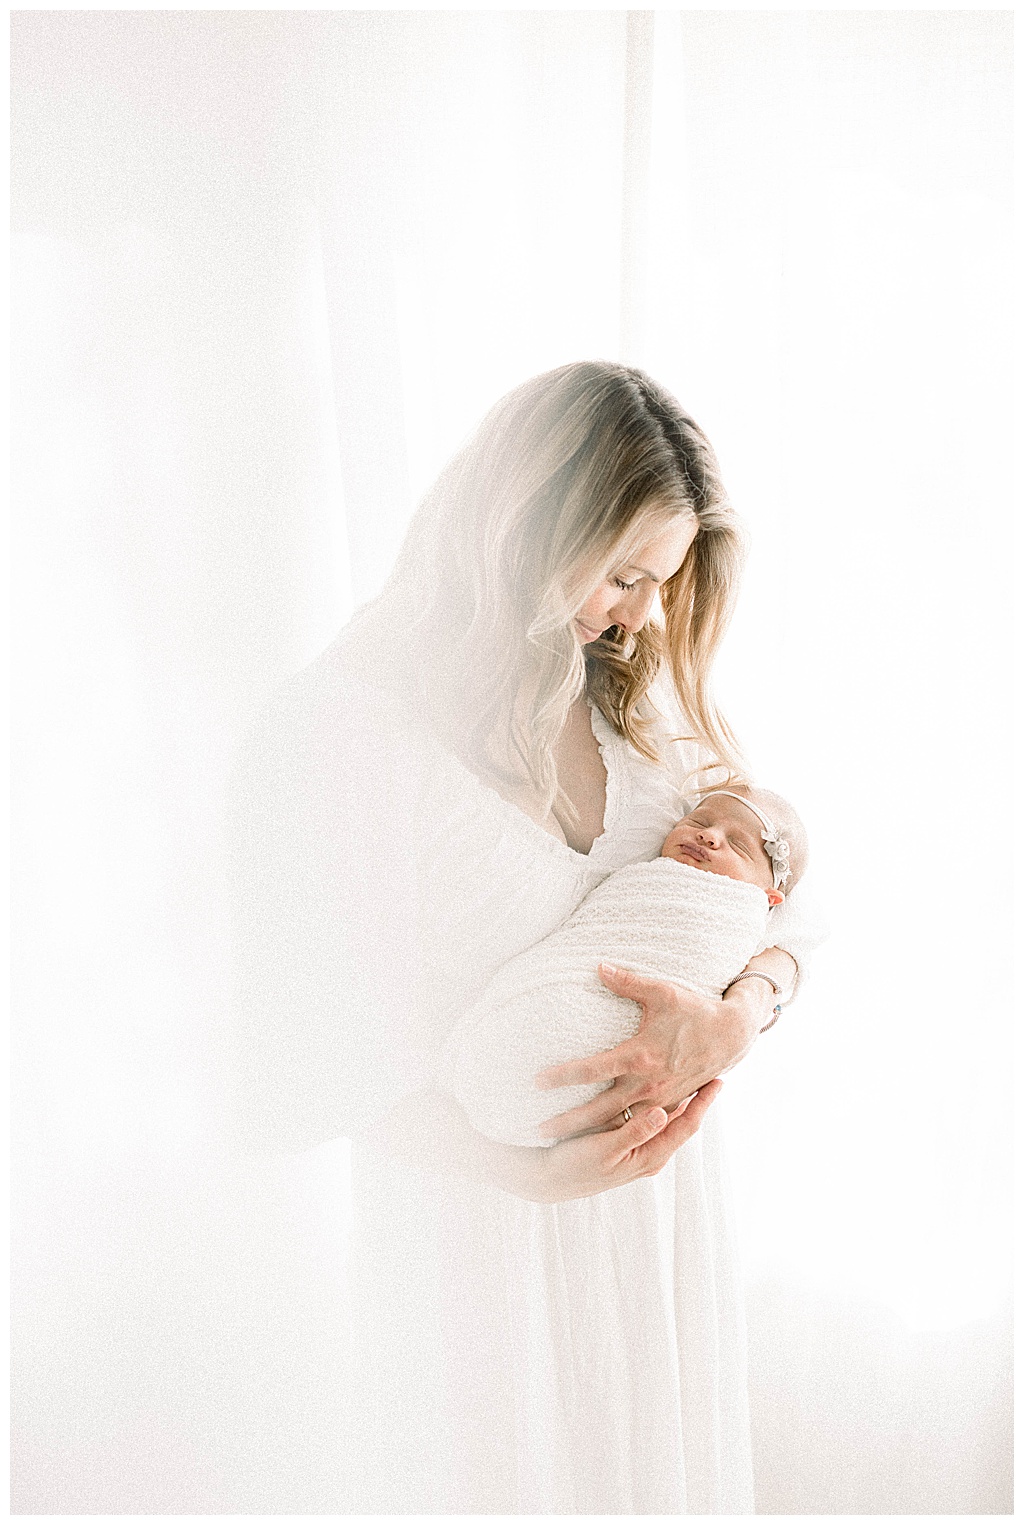 new mom holding newborn for her newborn photoshoot with the studio wardrobe